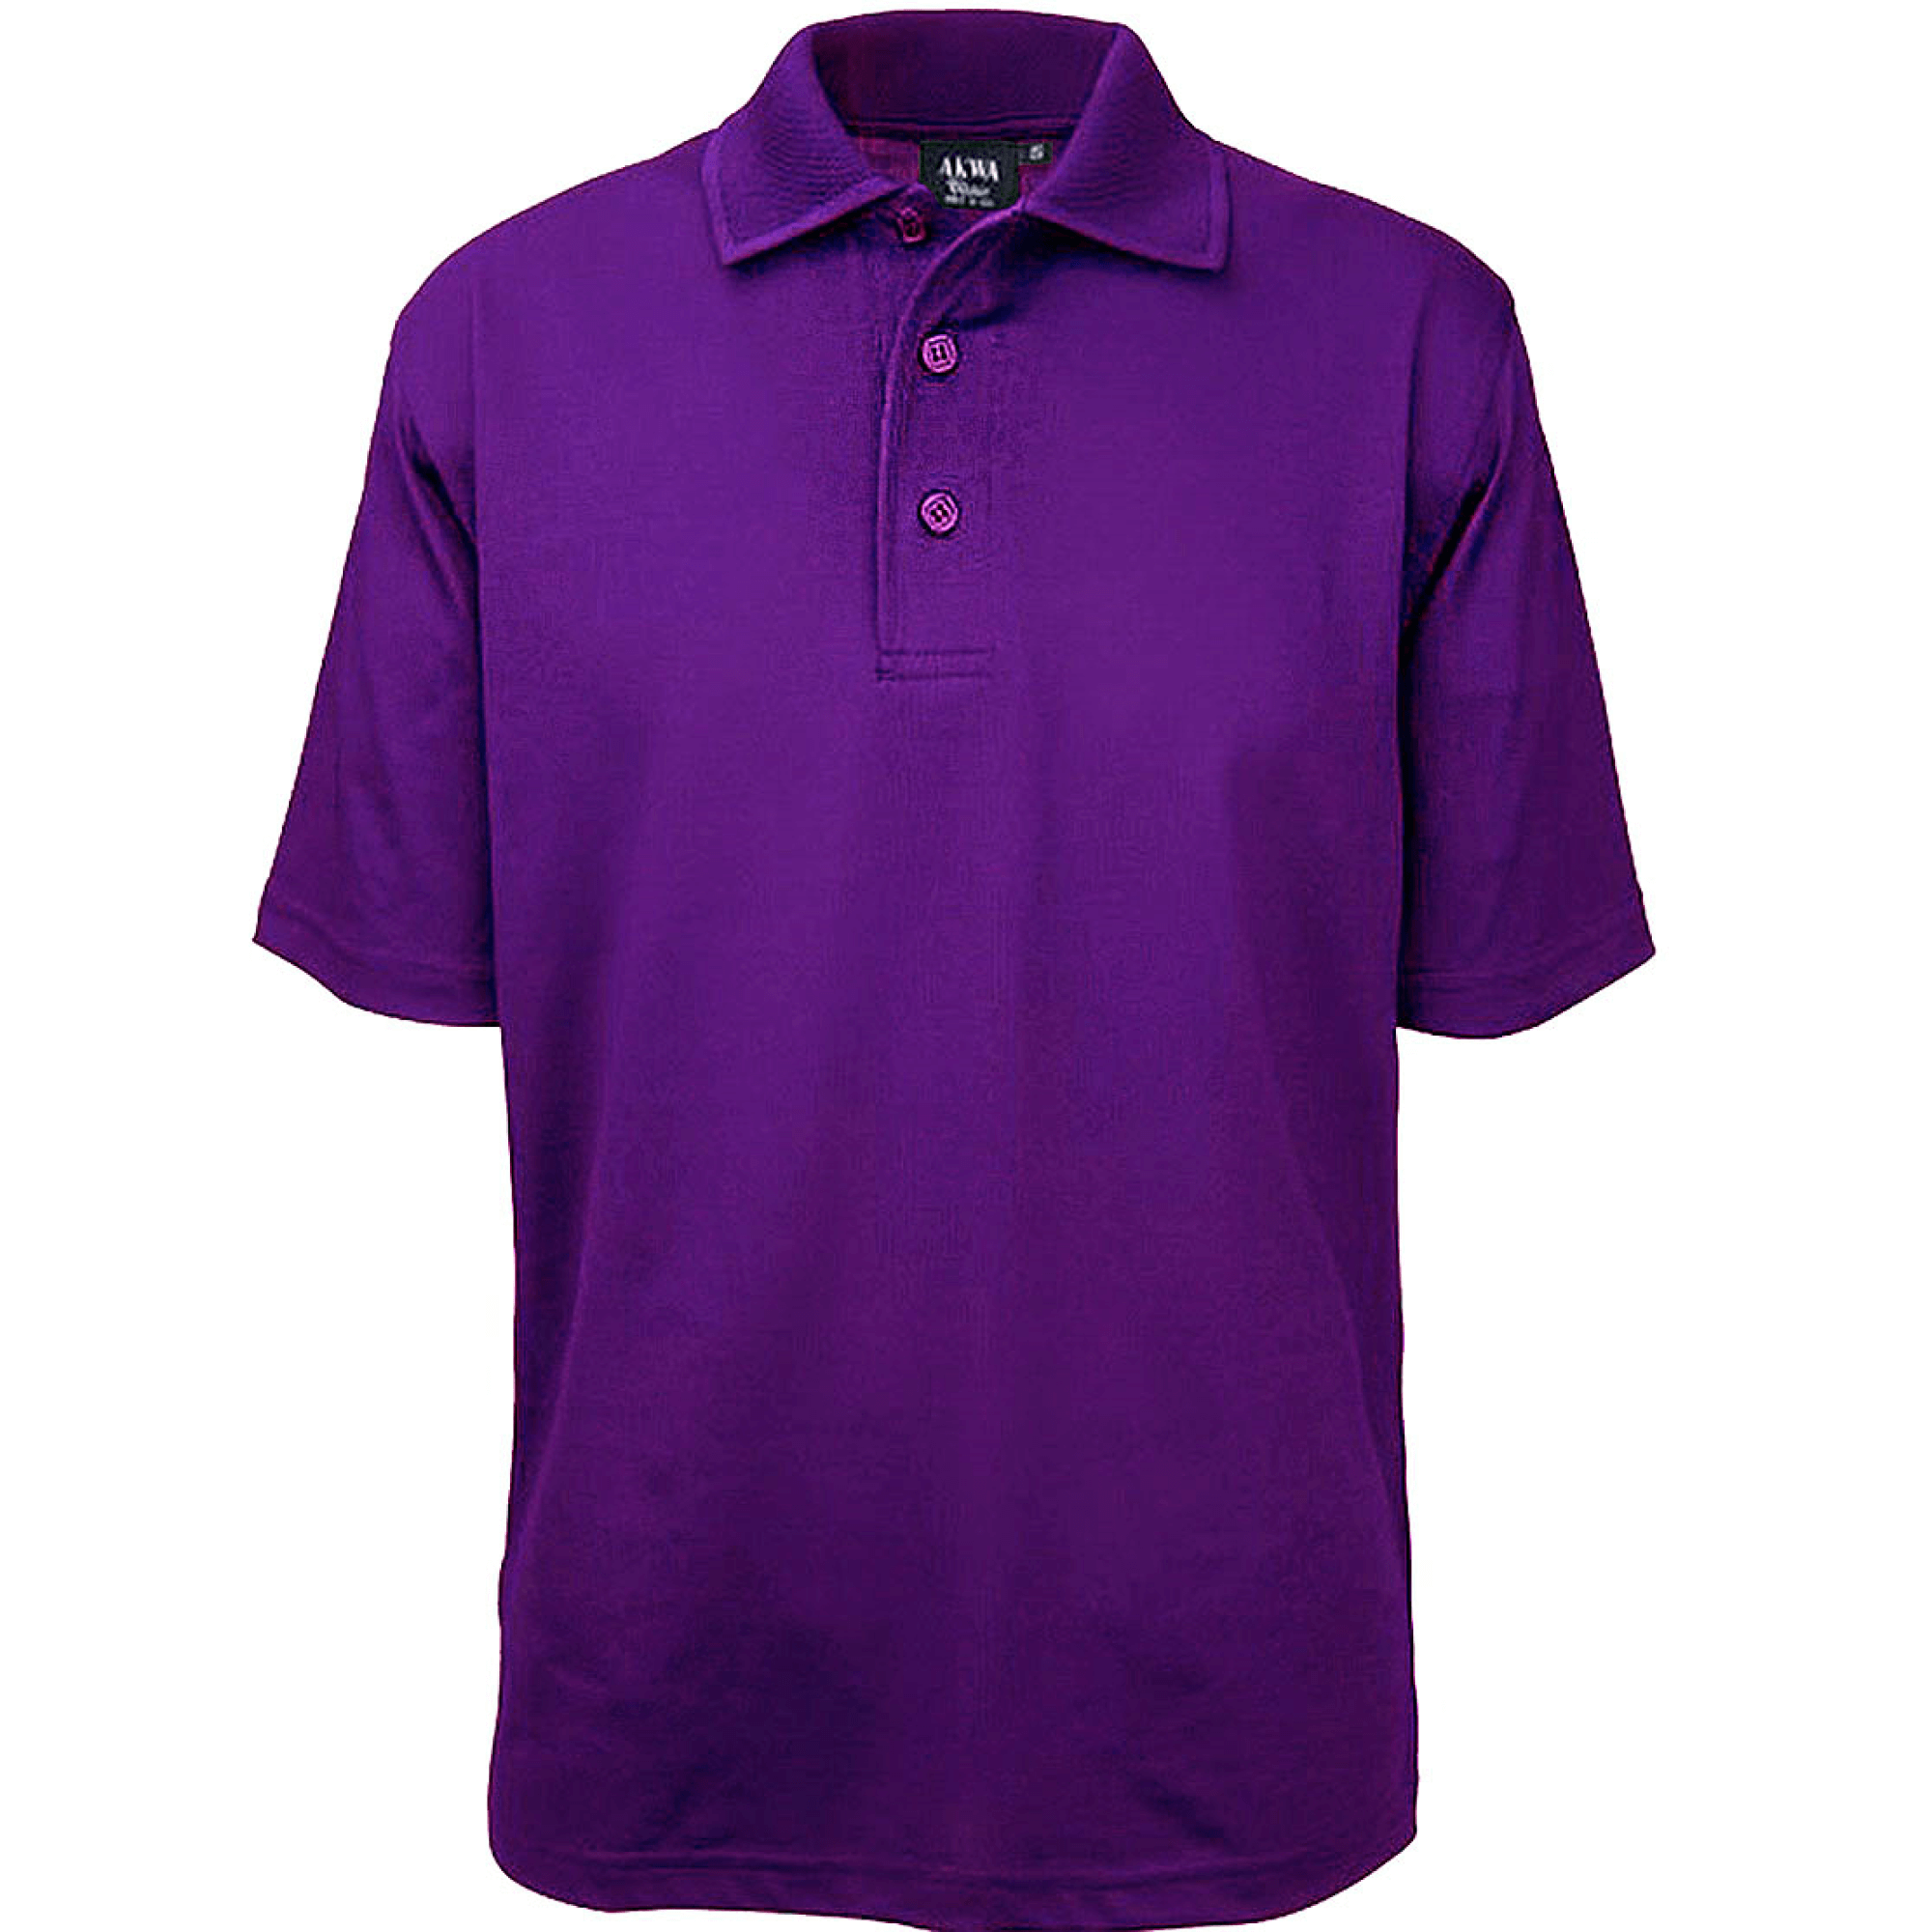 Men's Made in USA Tech Polo Shirt color_purple - the flag shirt